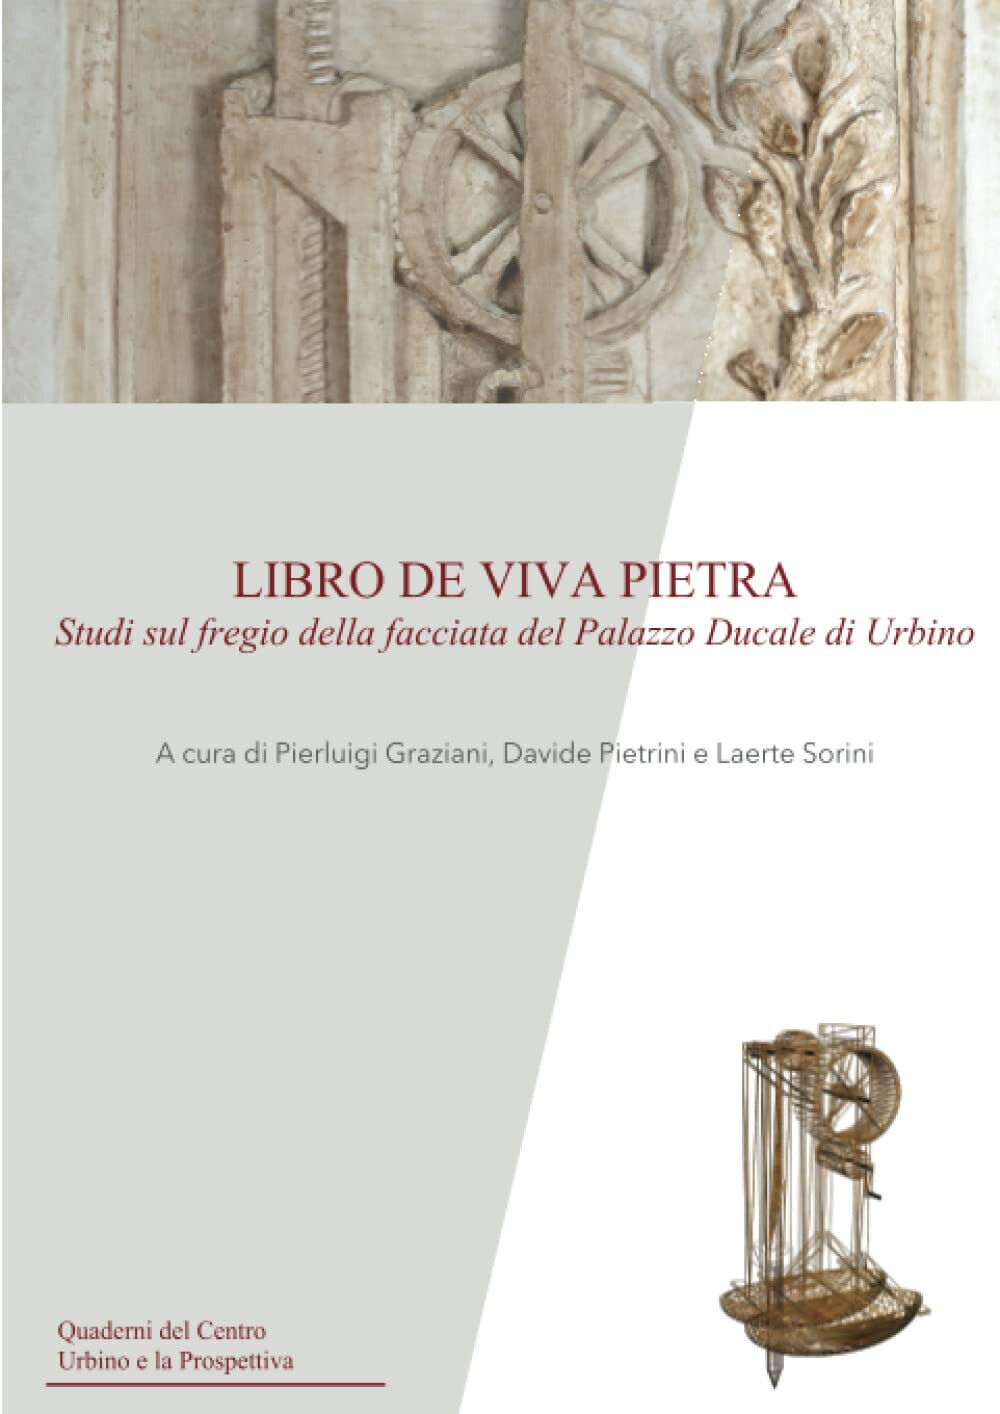 Libro de viva pietra - P. Graziani - Urbino University Press, 2023